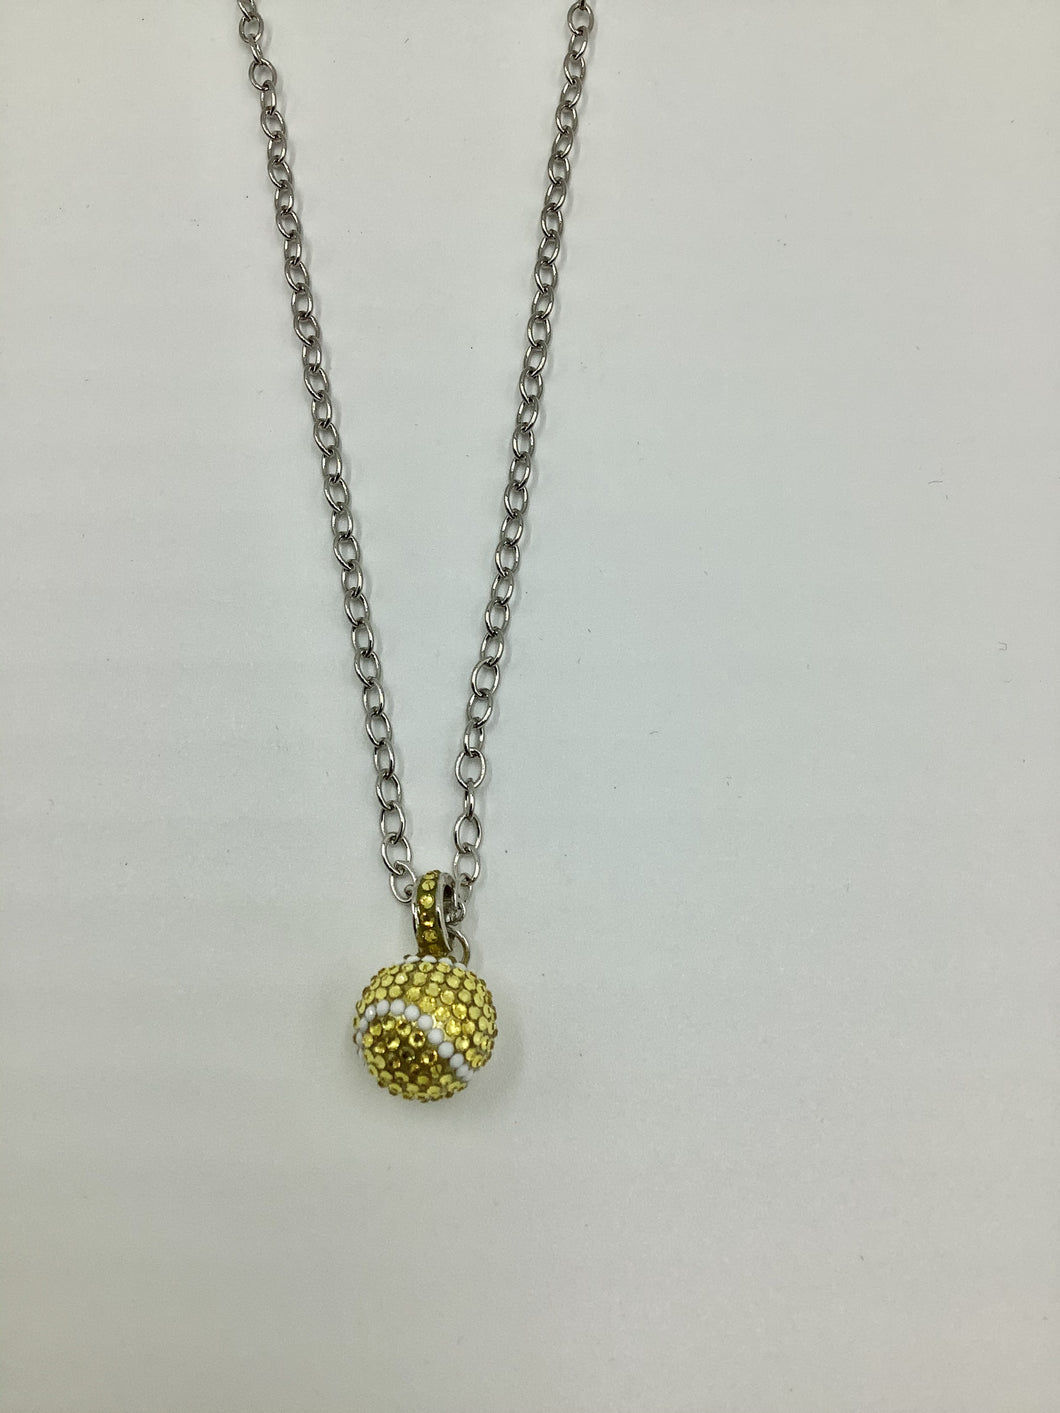 Emily Austin Swarovski Crystal 13mm Tennis Ball Necklace on Roller - Silver Chain